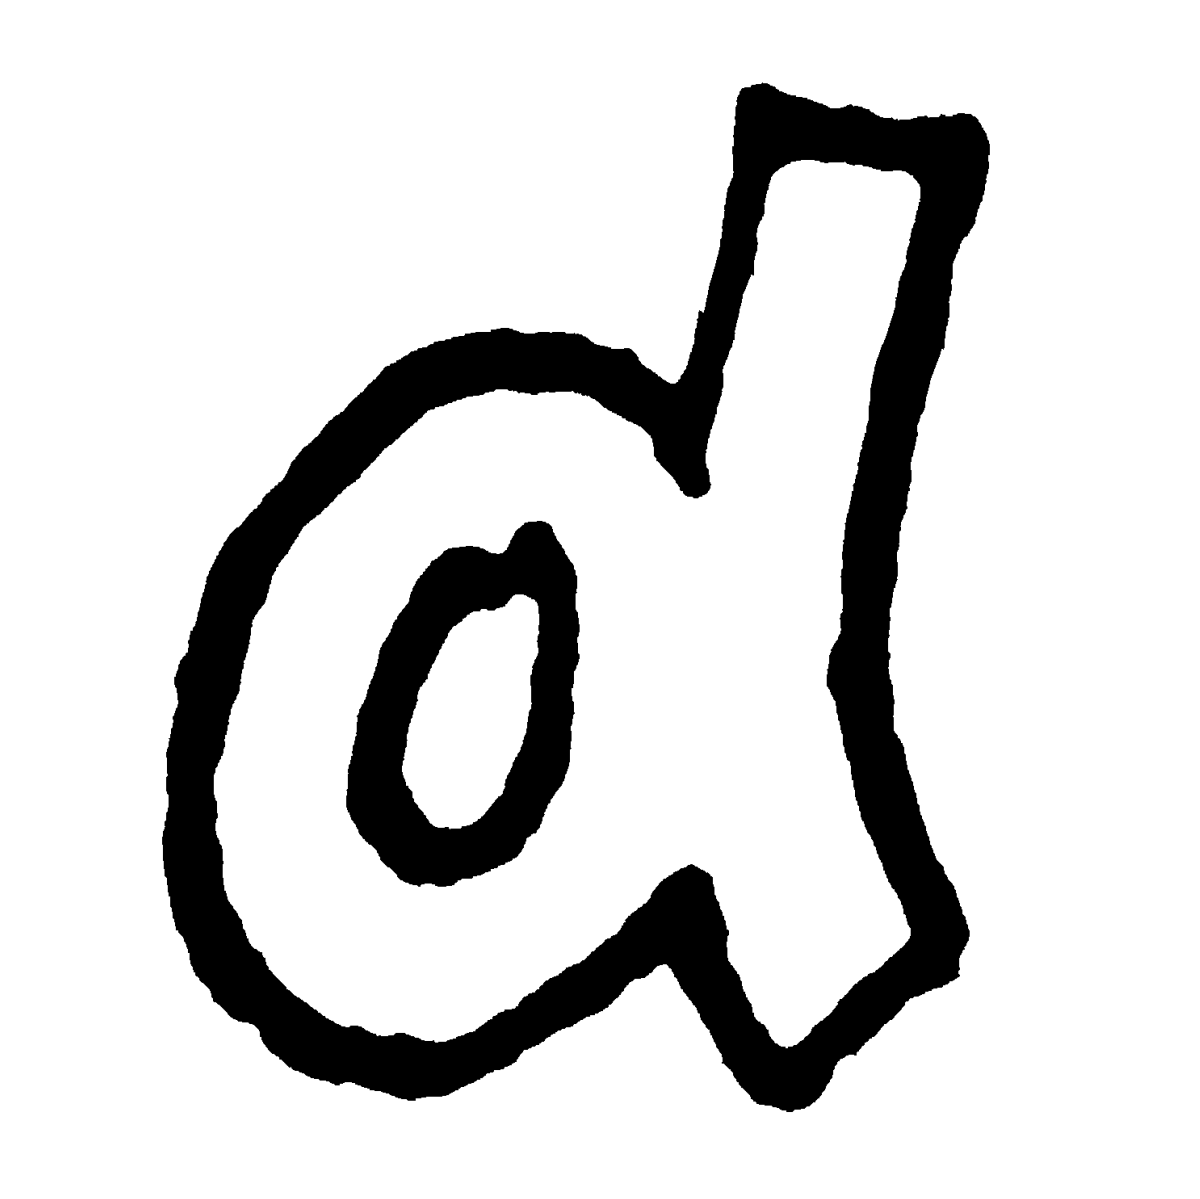 A D アルファベット 小文字 のイラスト A To D Lowercase Alphabet てがきですのb かわいい ゆるい無料イラスト